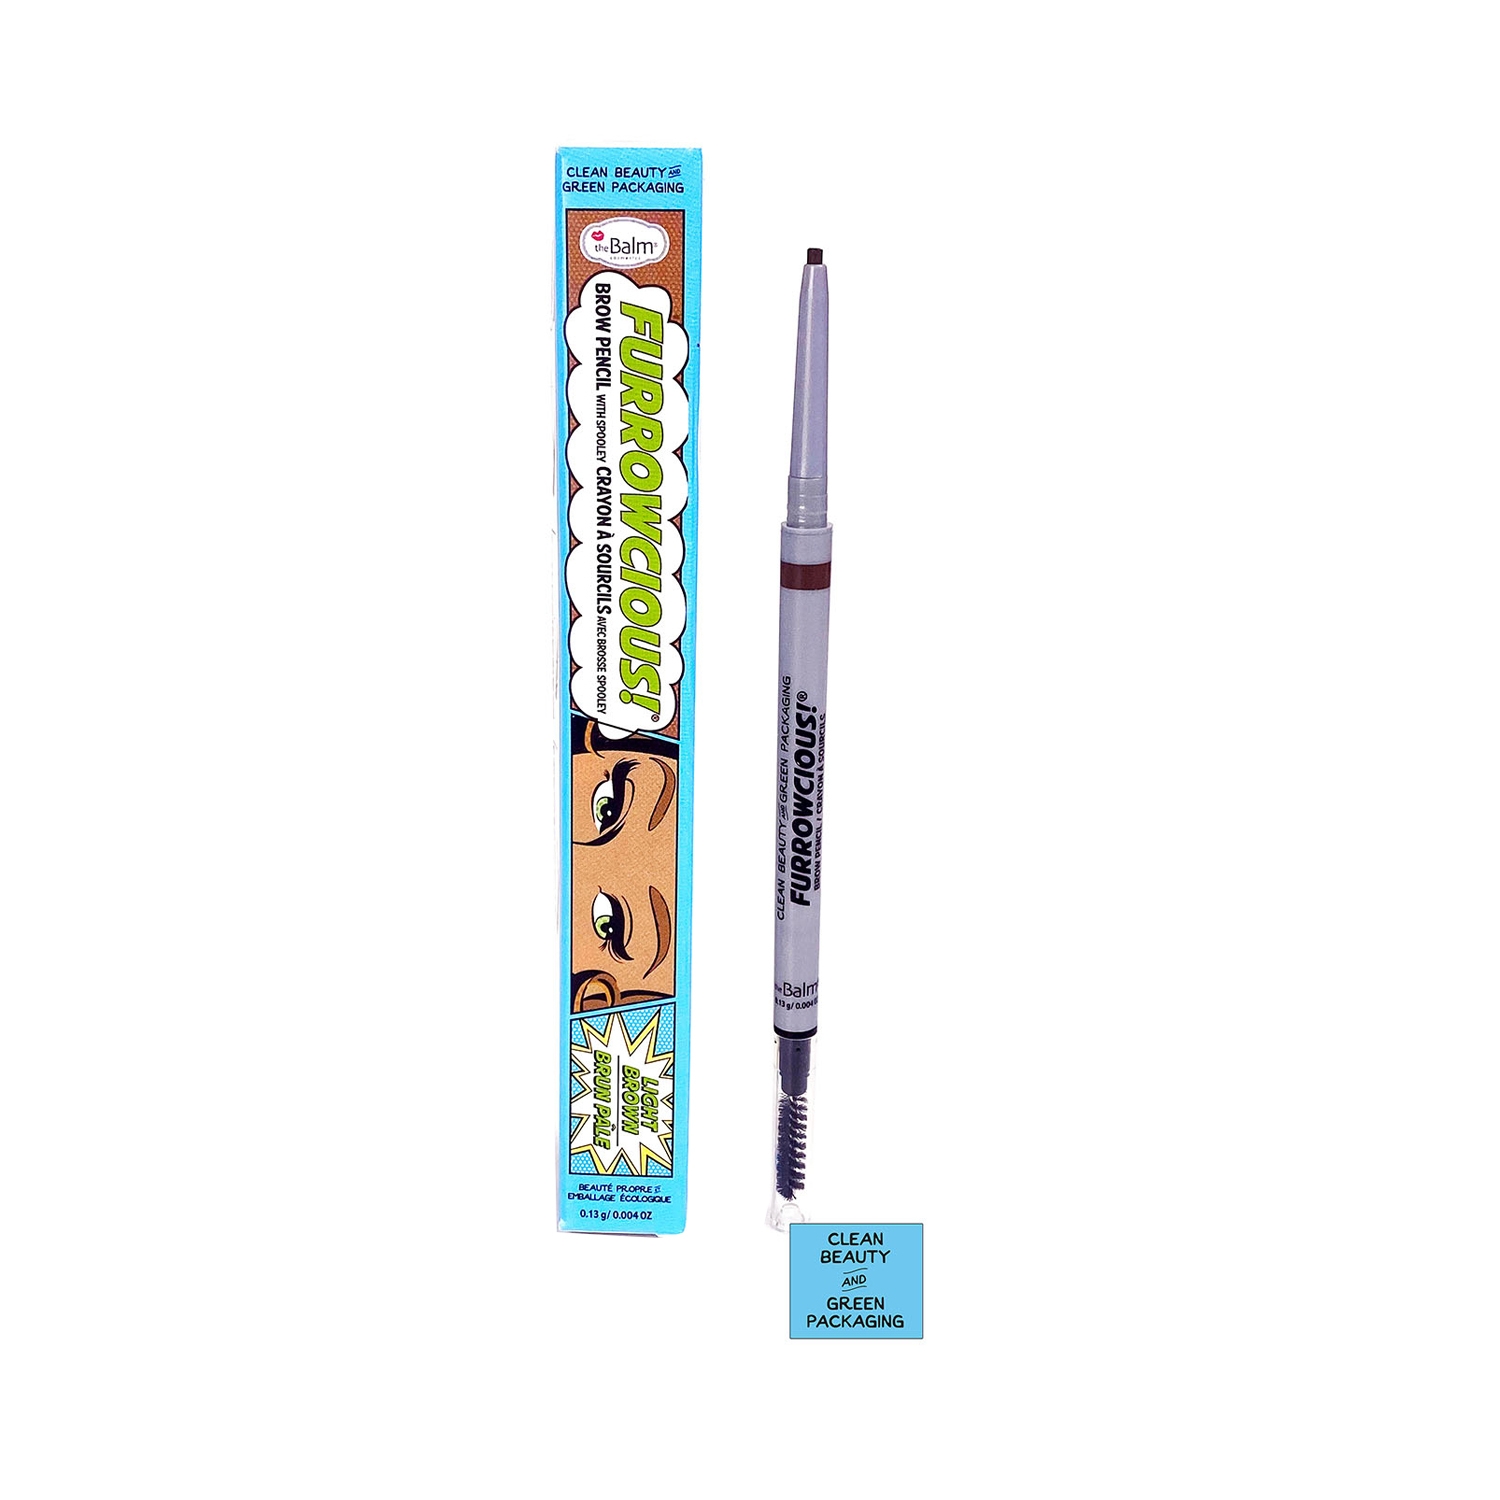 theBalm Cosmetics | theBalm Cosmetics Furrowcious Brow Pencil With Spoolie - Light Brown (0.09g)